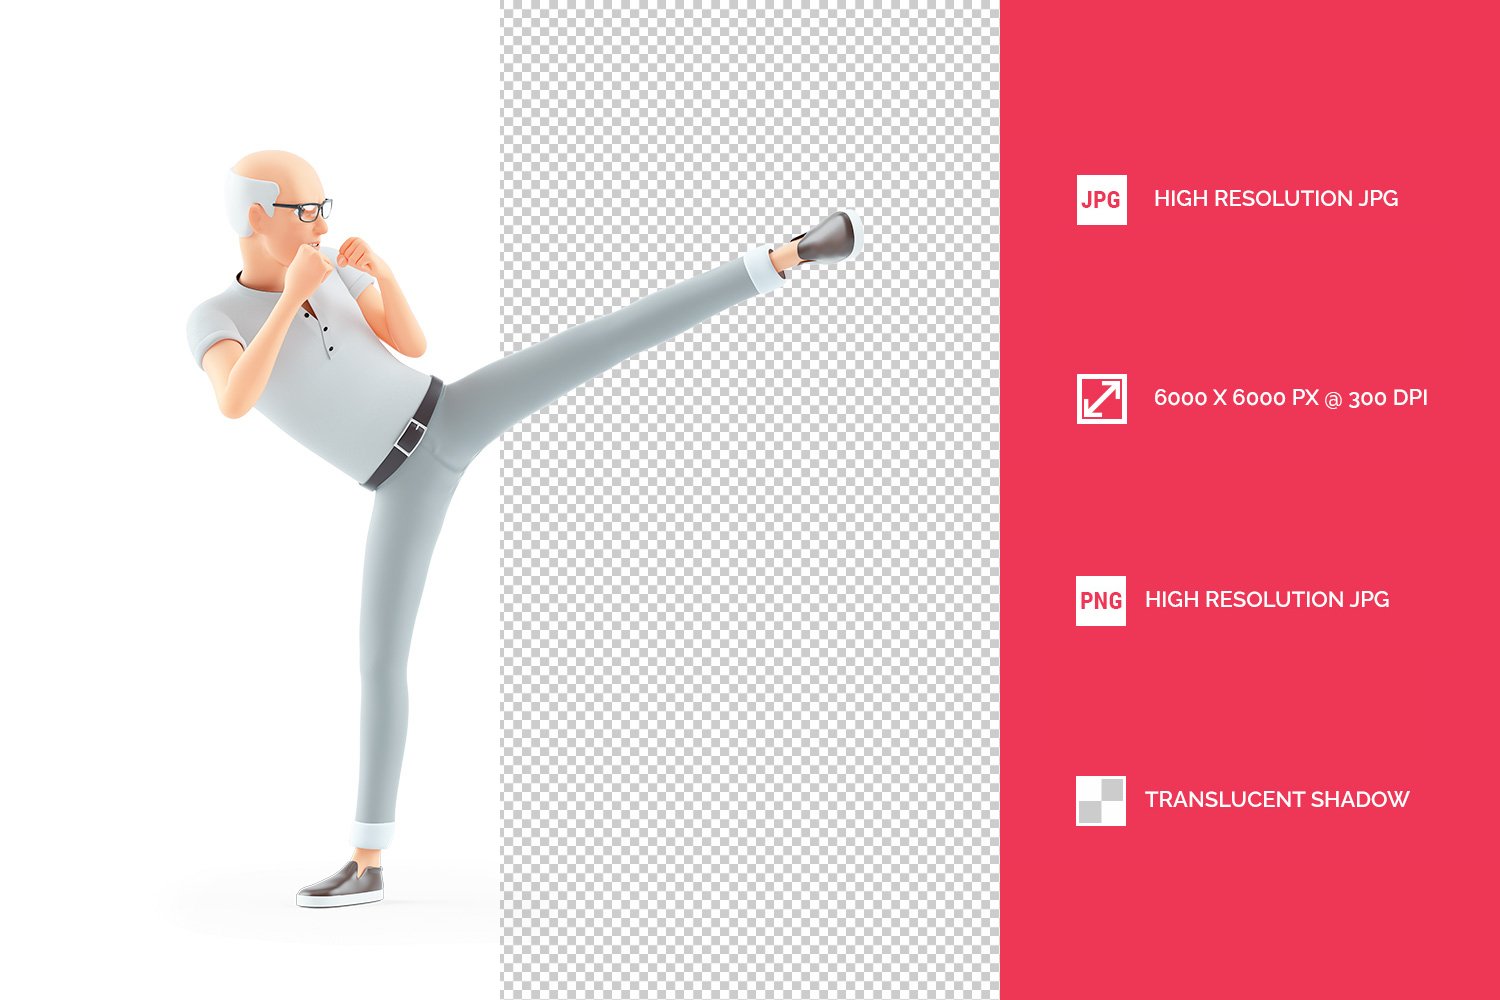 3D Senior Man Karate Kick cover image.